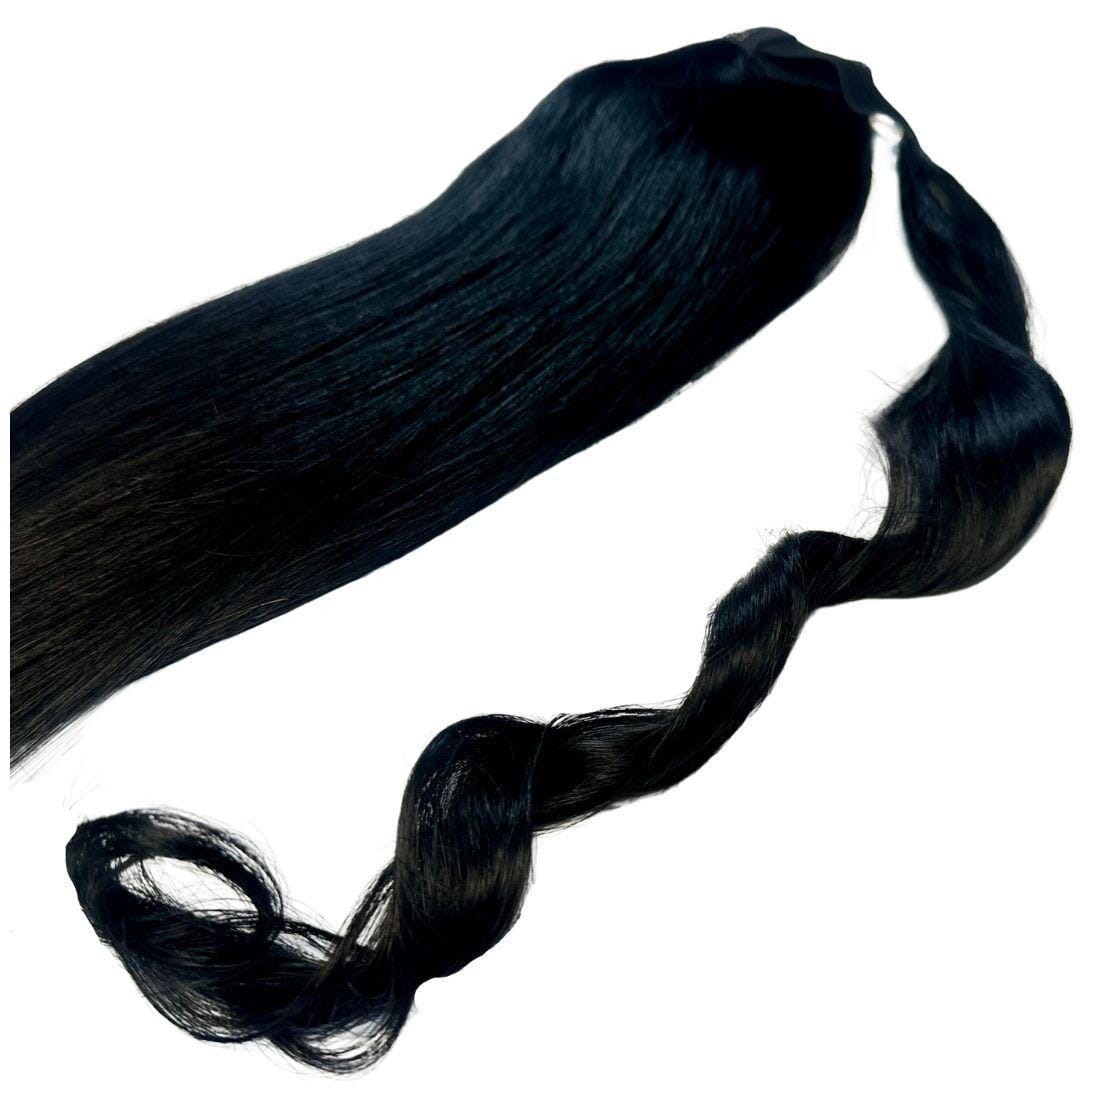 Jet Black Ponytail HBL Hair Extensions 